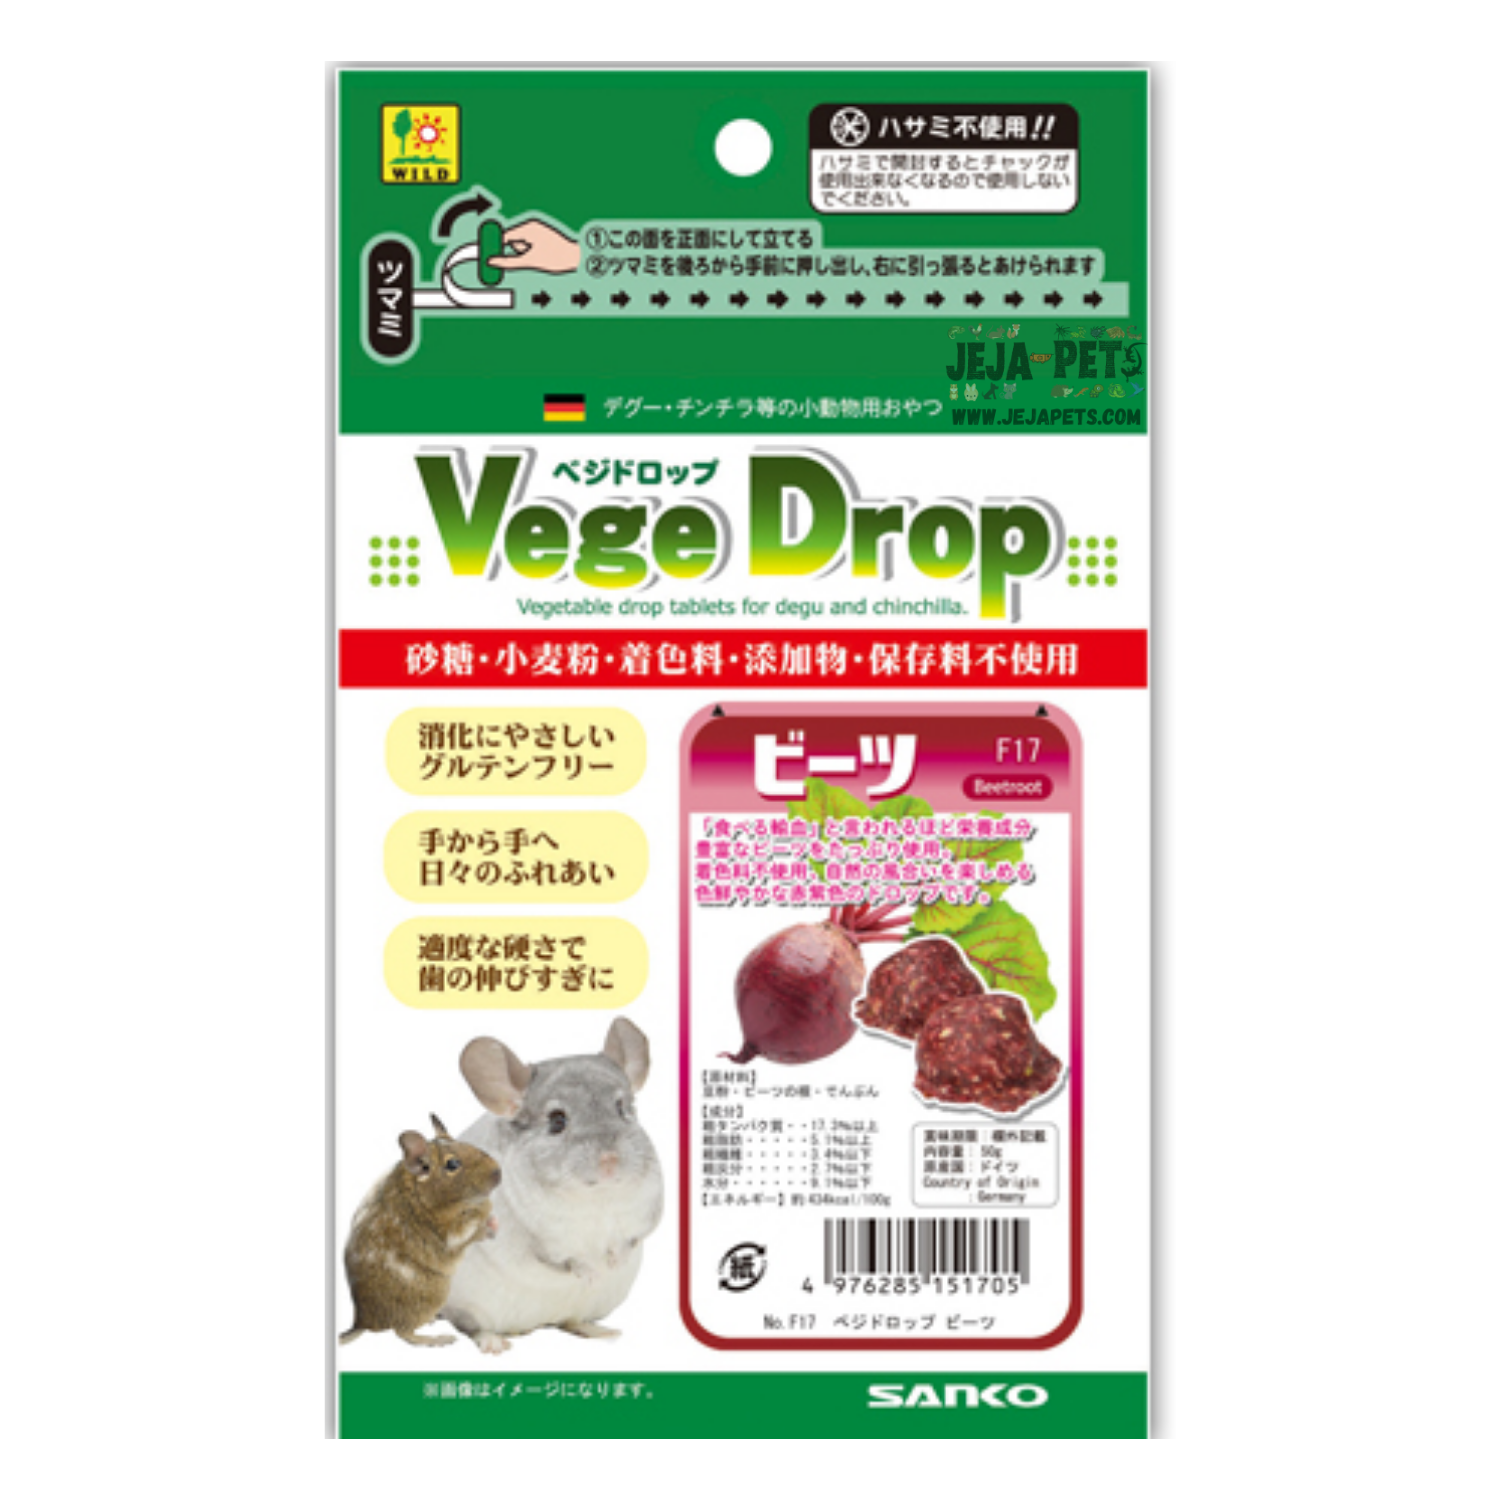 [DISCONTINUED] Sanko Wild Vegetable Drops Beetroot - 50g